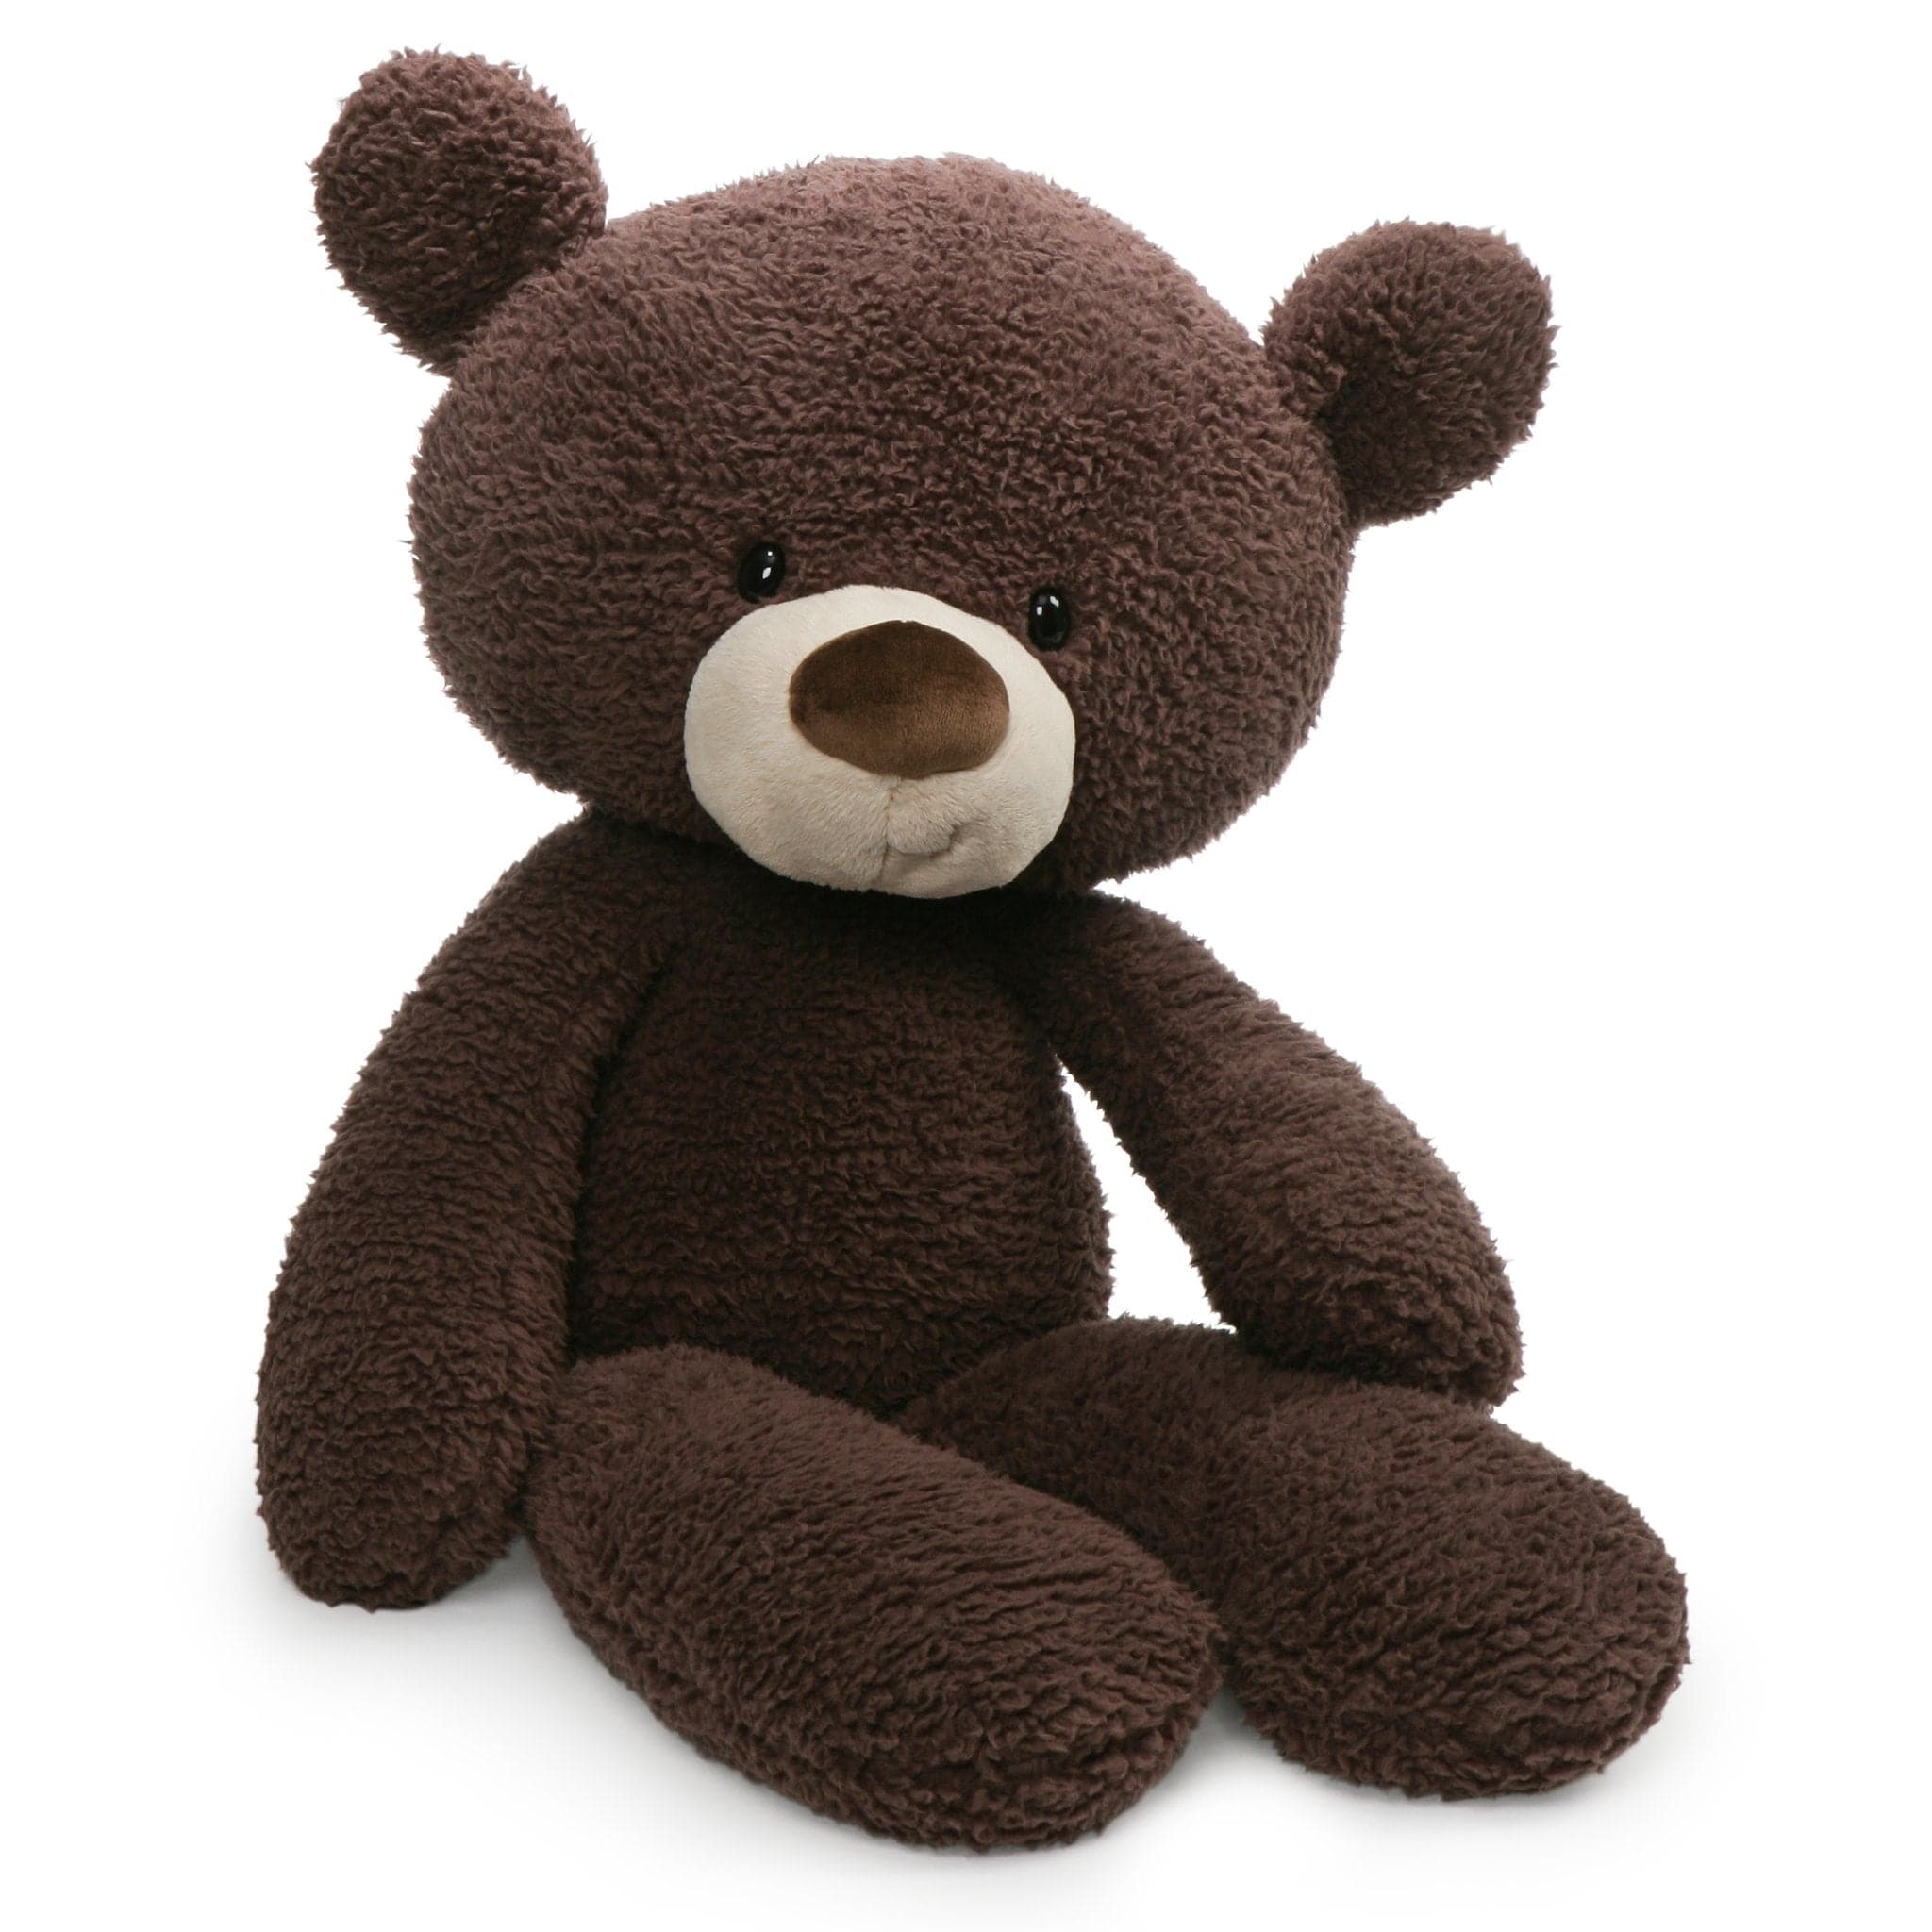 Gund-Fuzzy Teddy Bear - Chocolate-11681-24